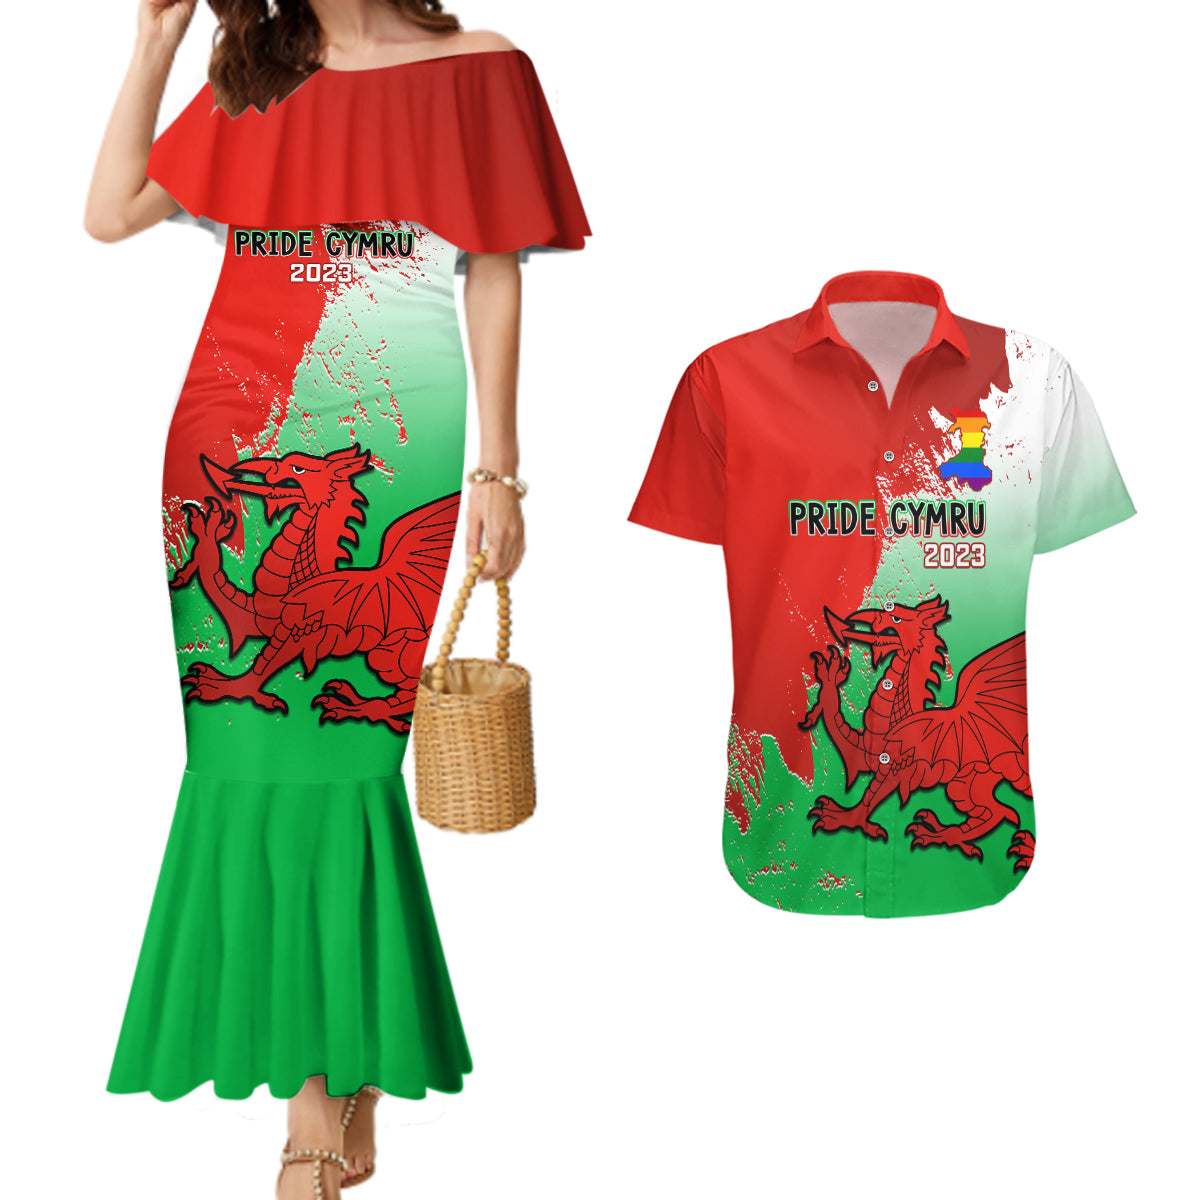 custom-pride-cymru-couples-matching-mermaid-dress-and-hawaiian-shirt-2023-wales-lgbt-with-welsh-red-dragon